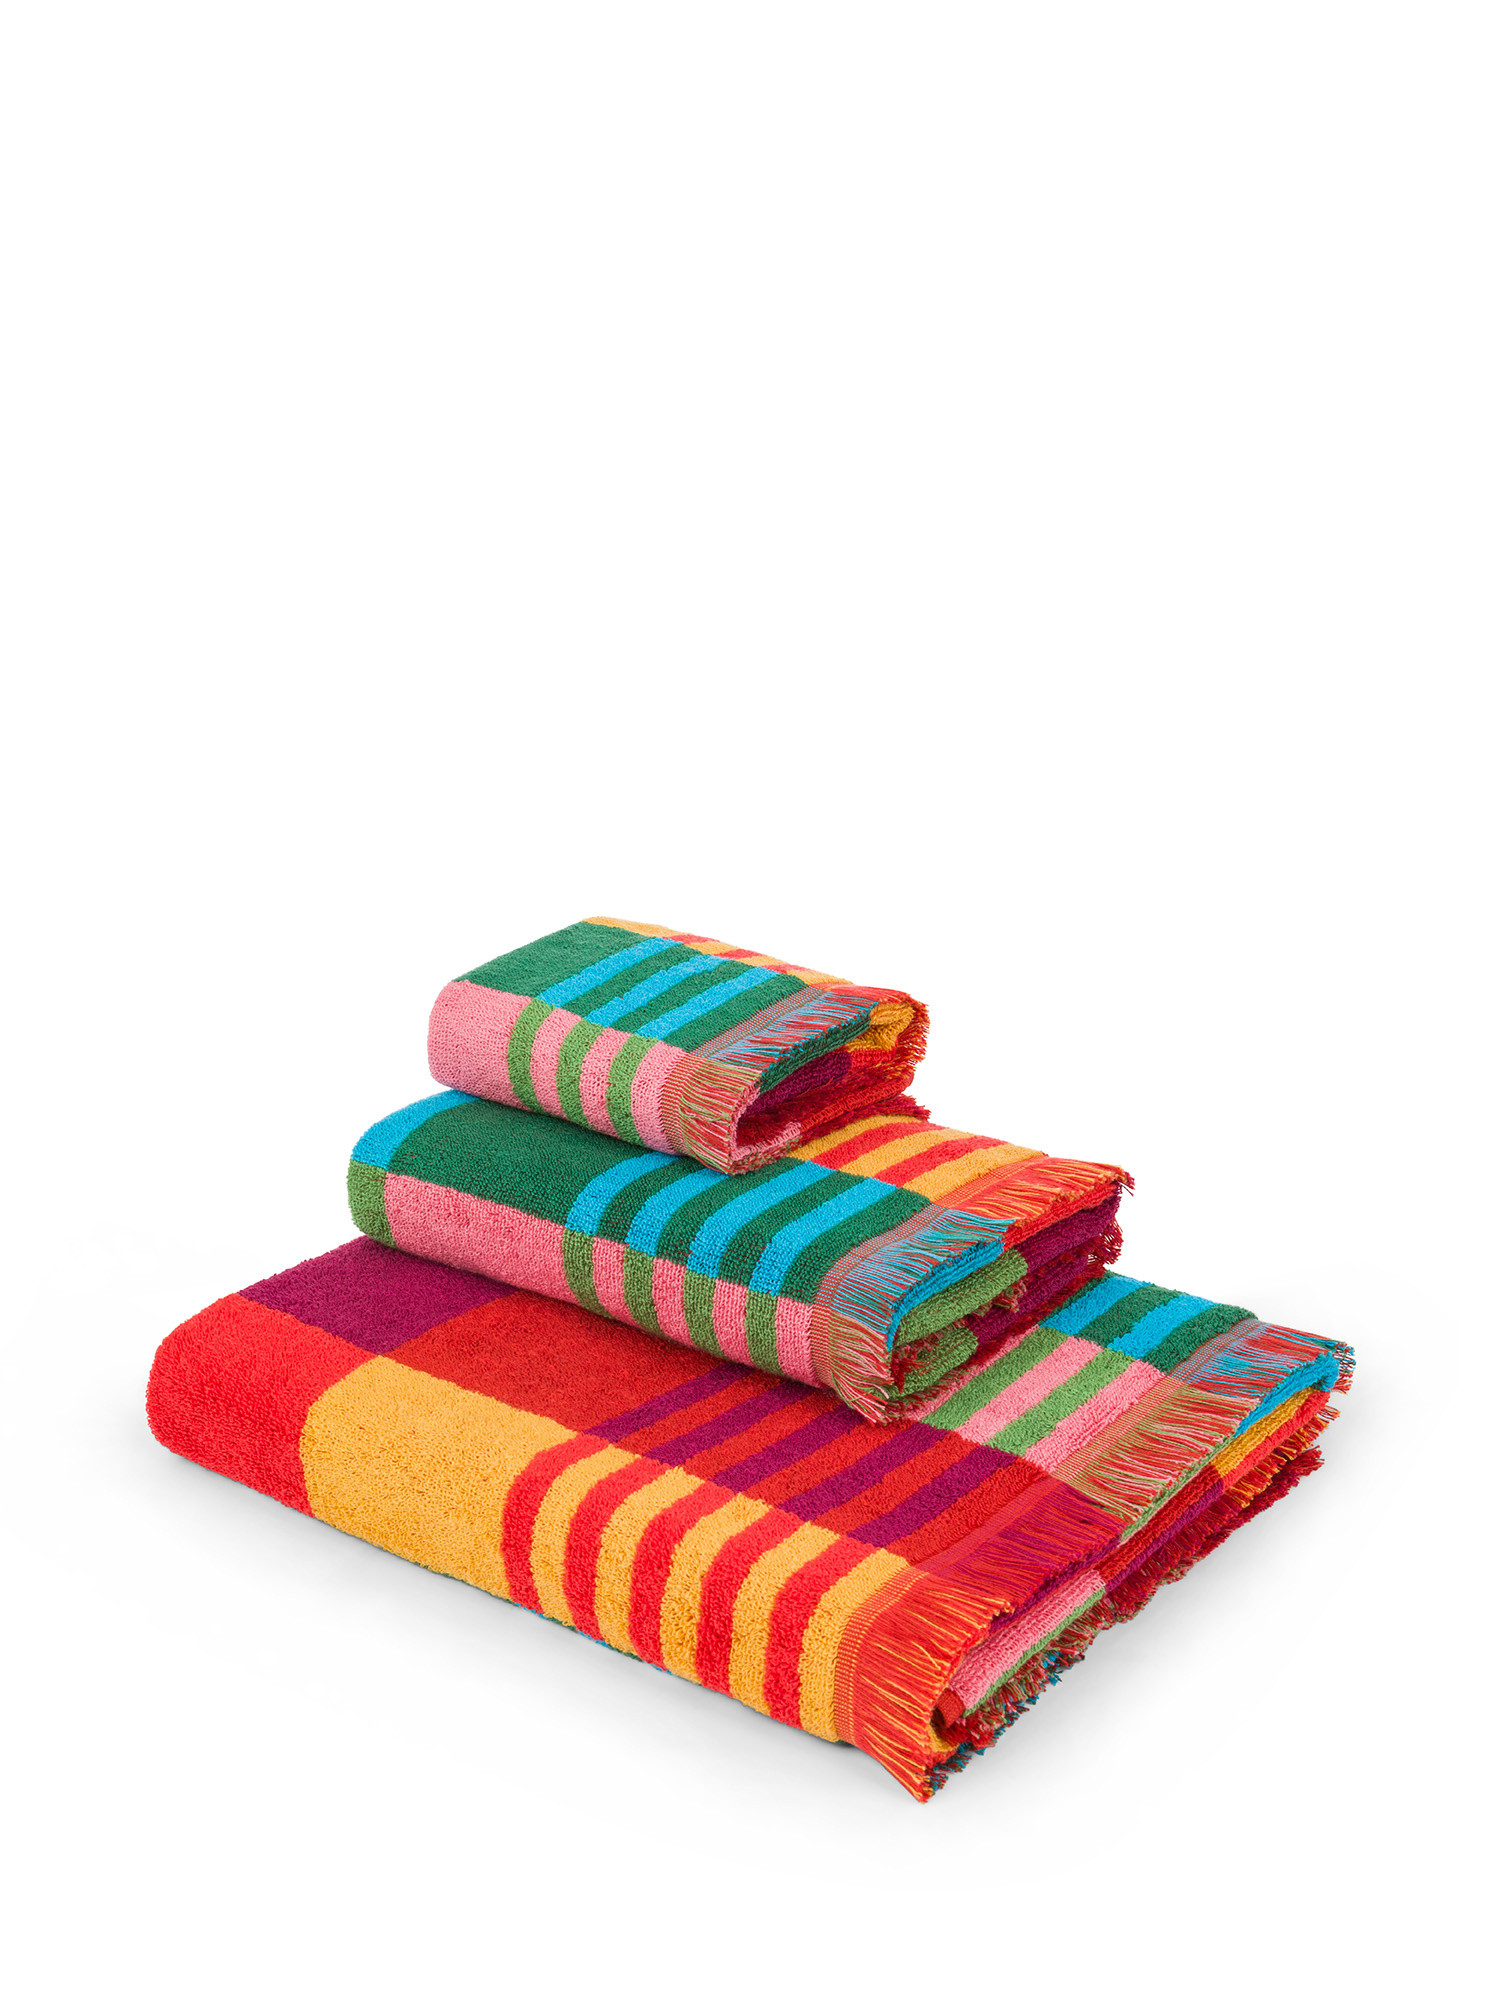 Asciugamano spugna di cotone motivo quadri, Multicolor, large image number 0